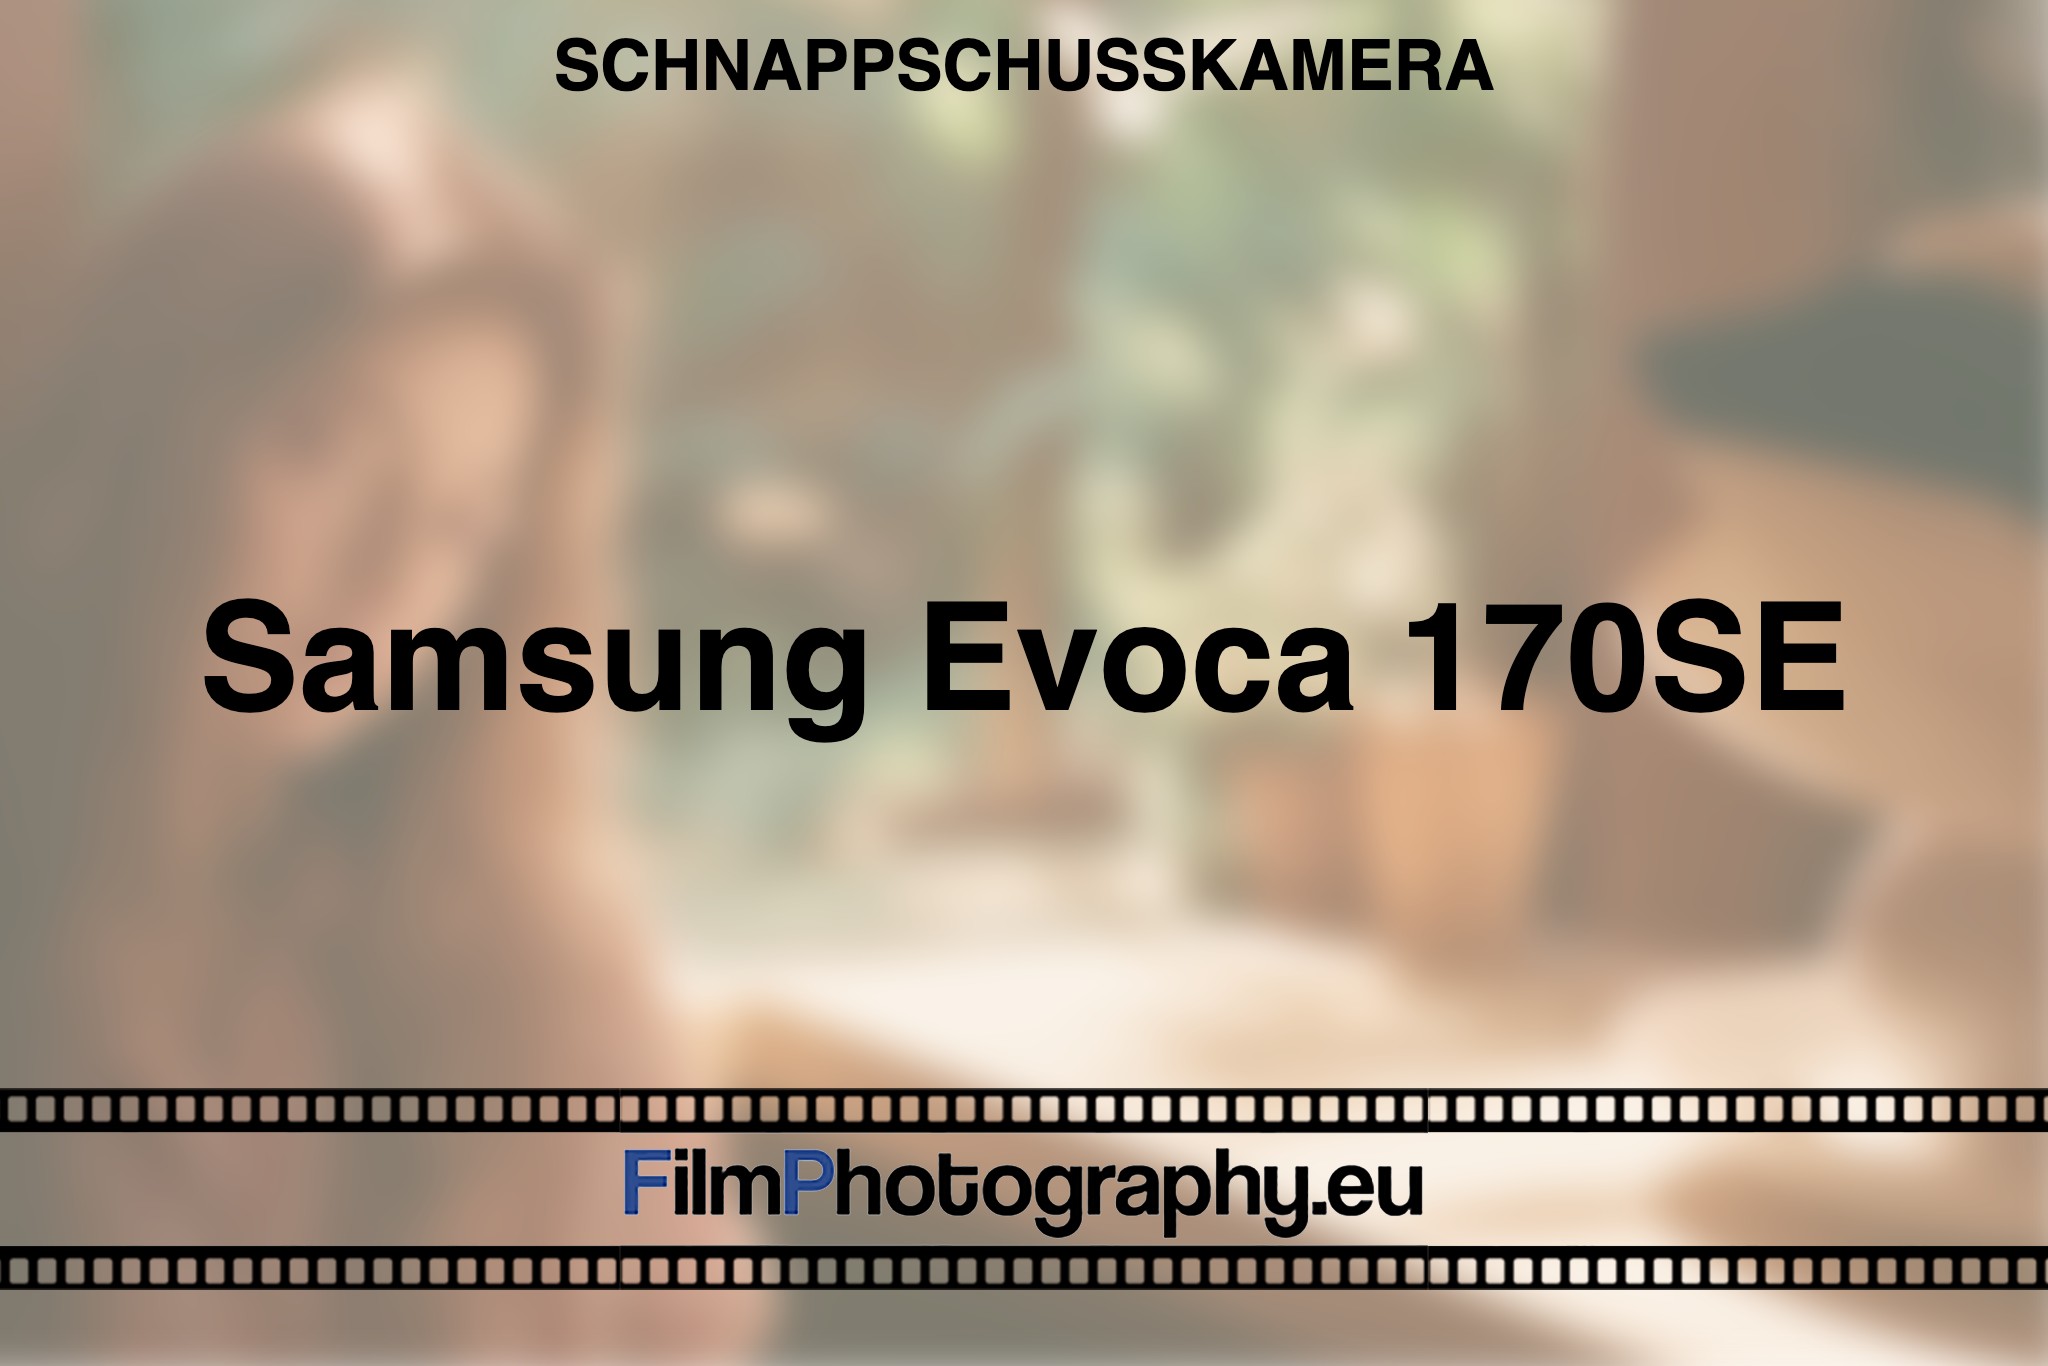 samsung-evoca-170se-schnappschusskamera-bnv